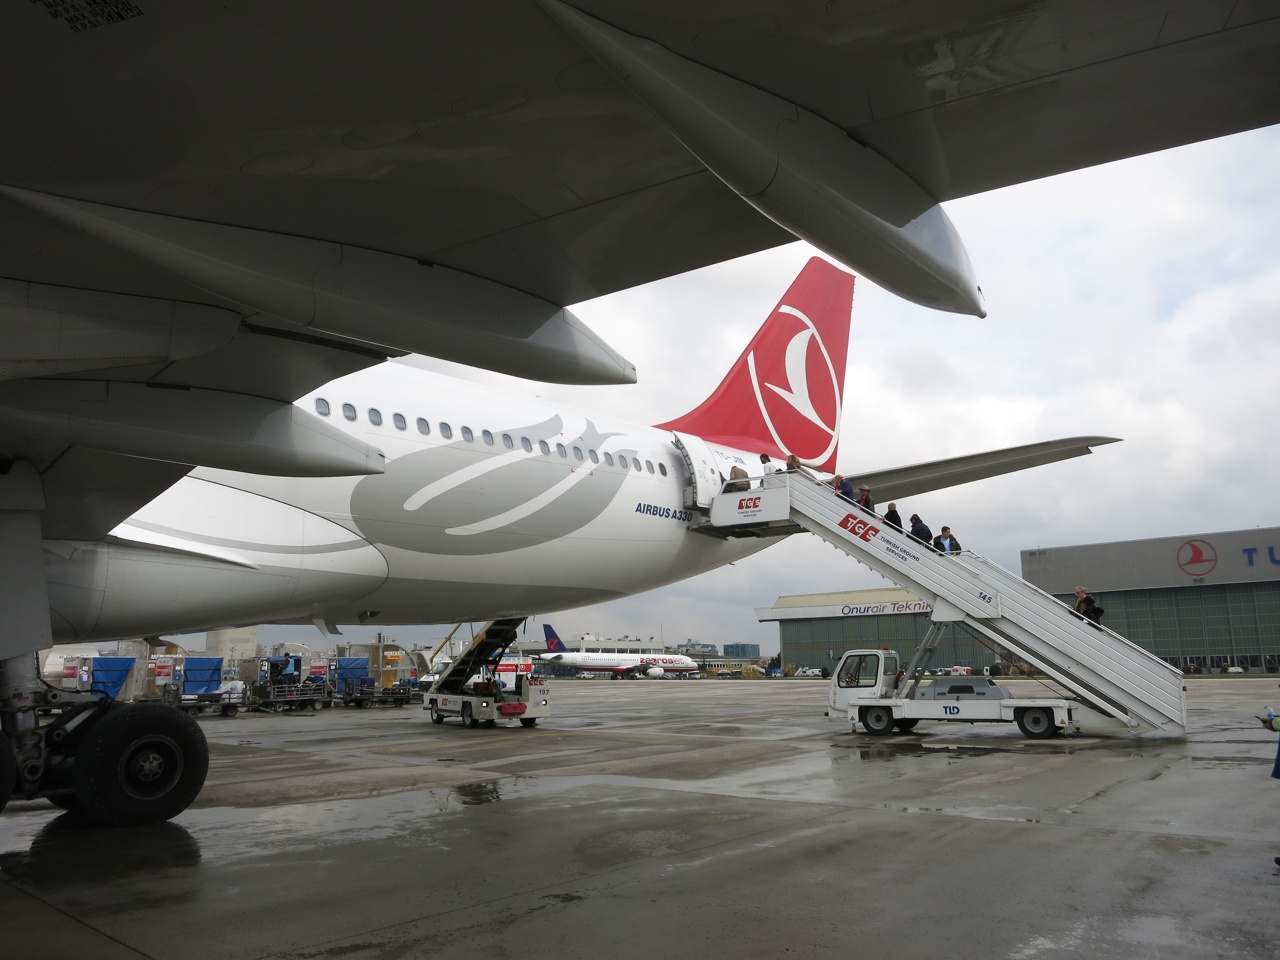 Turkish Airlines Economy class A330, - Jet Airways wet lease, 006.JPG